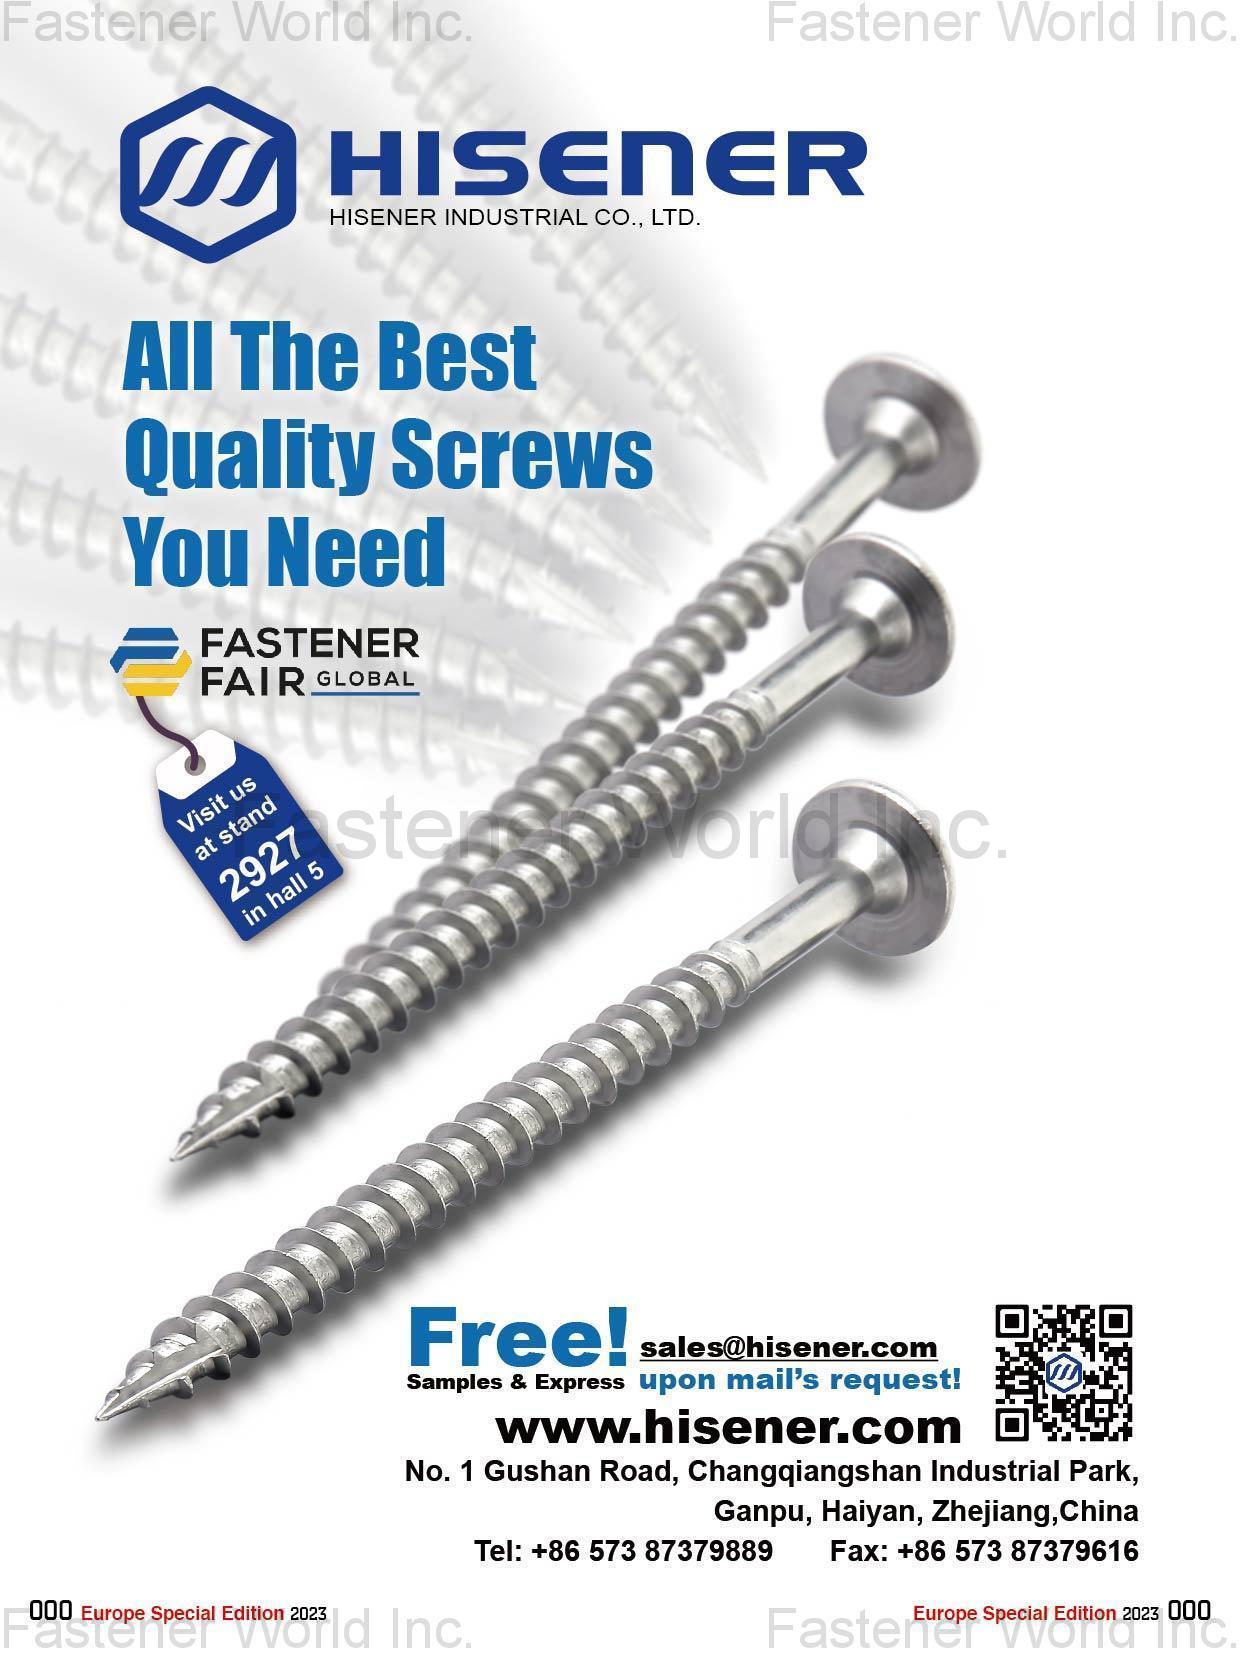 HISENER INDUSTRIAL CO., LTD. , The Best Quality Stainless Steel Screws